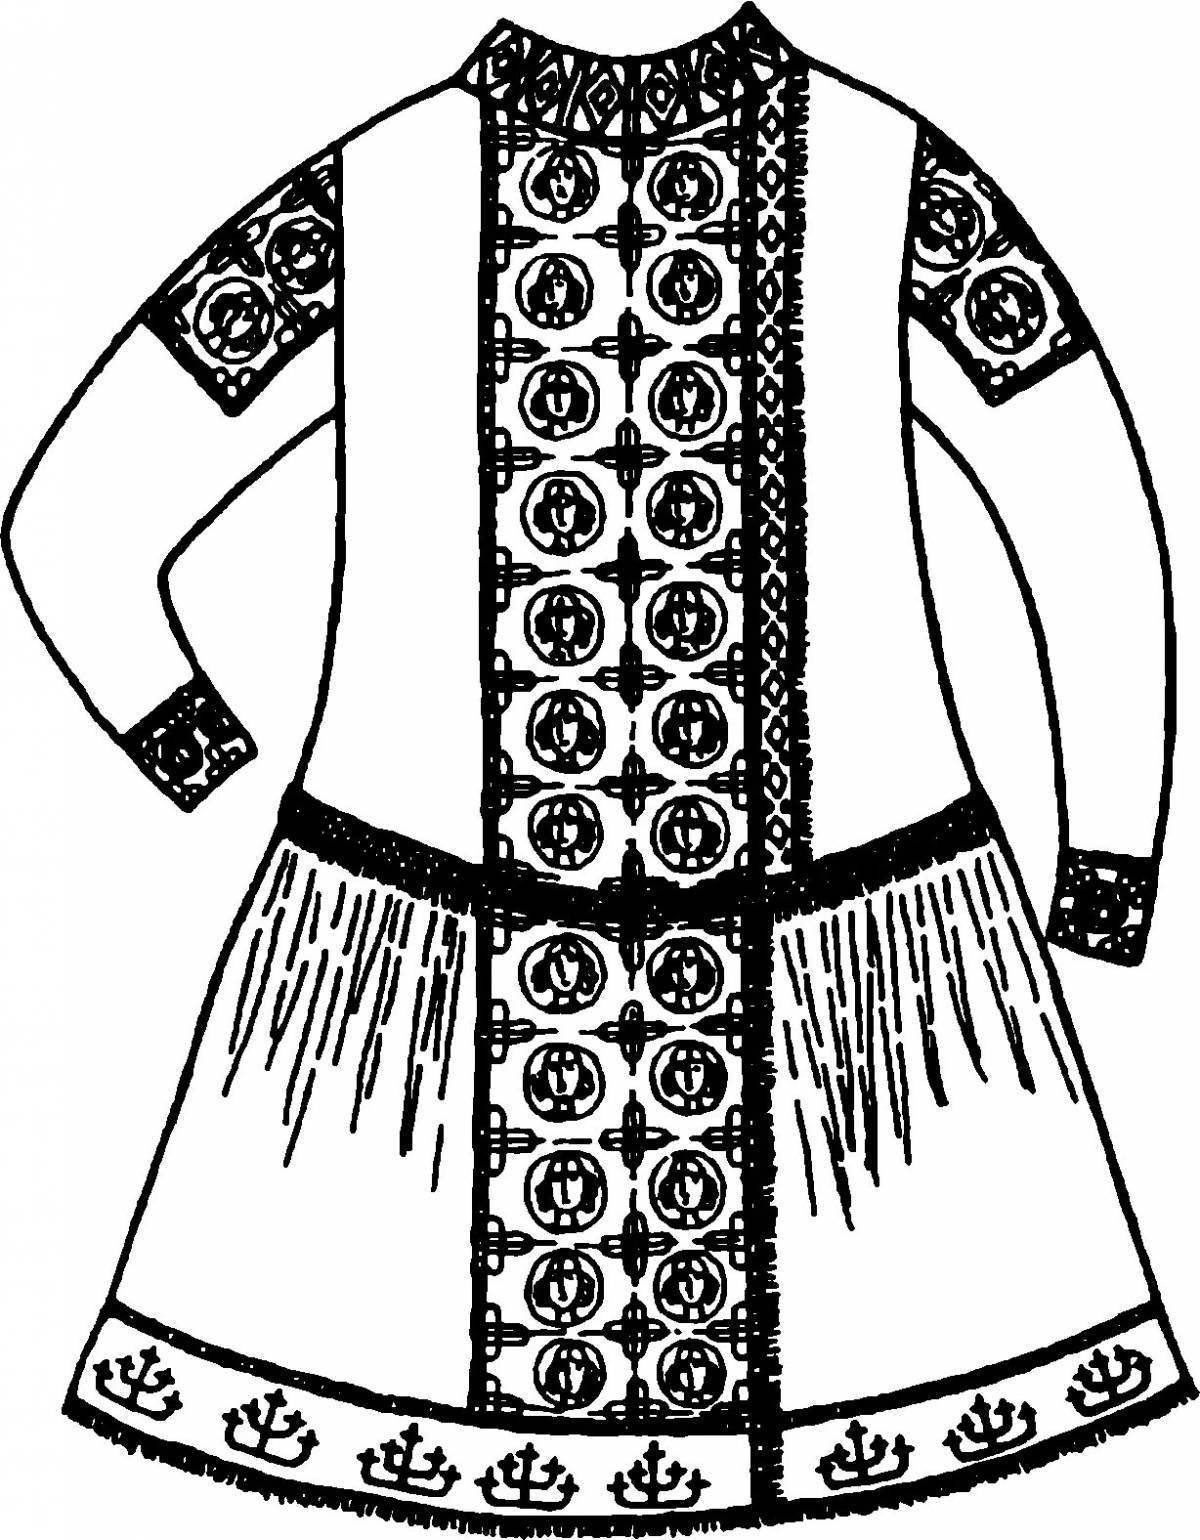 Decorated Bashkir national costume